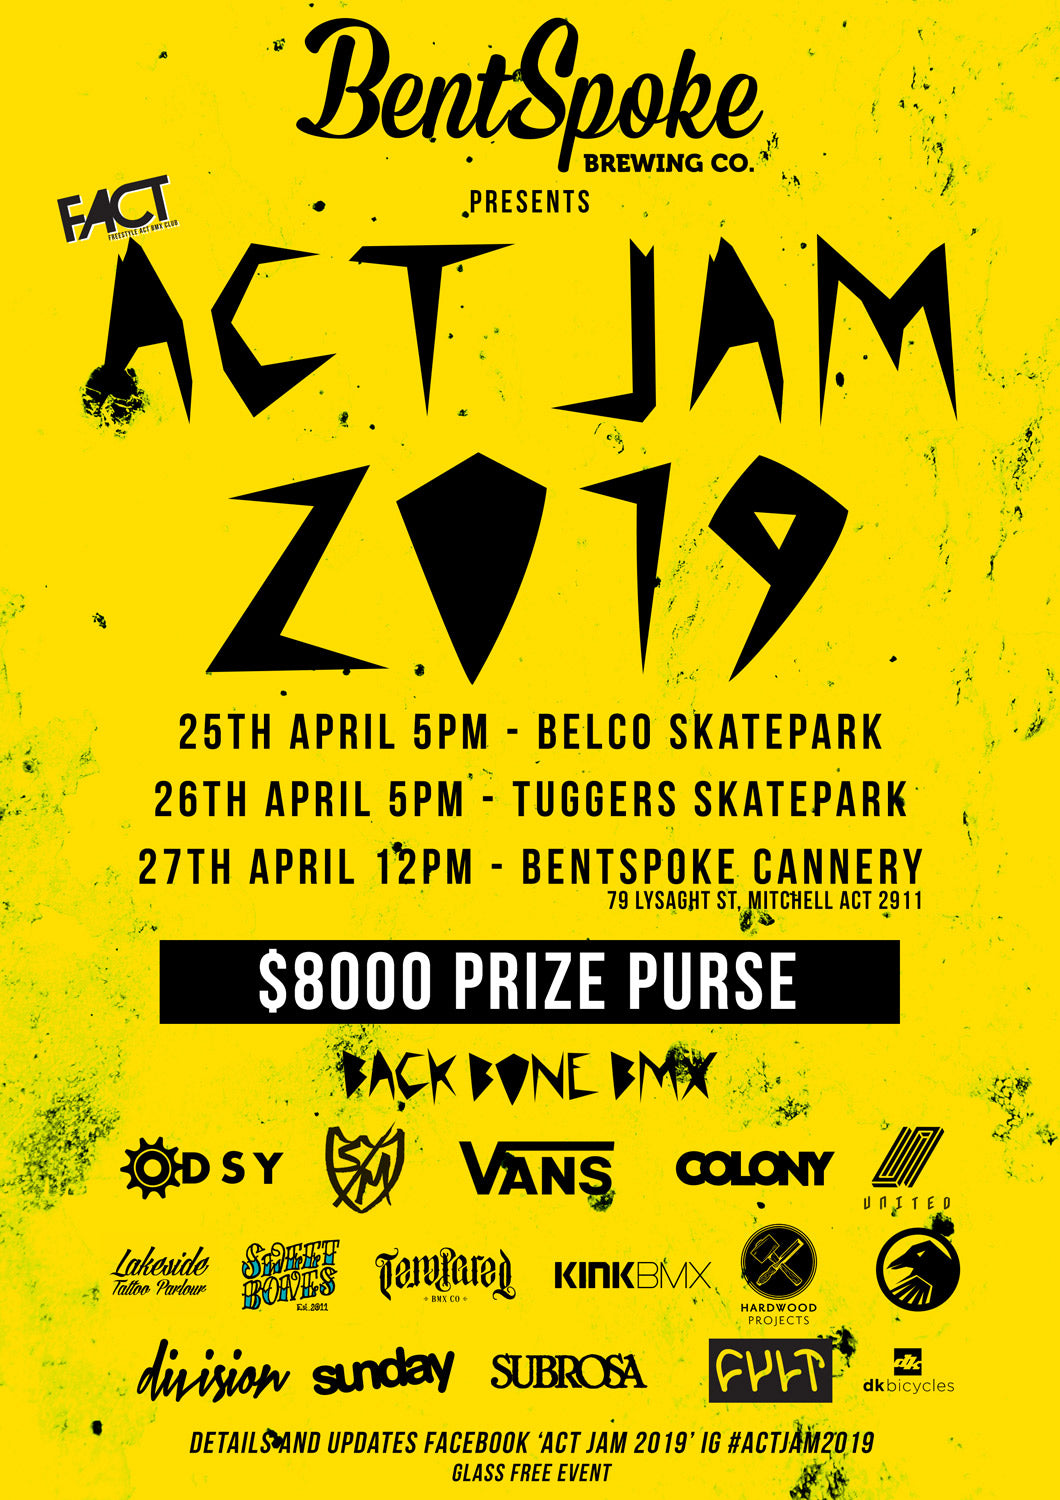 ACT jam 2019 back bone bmx